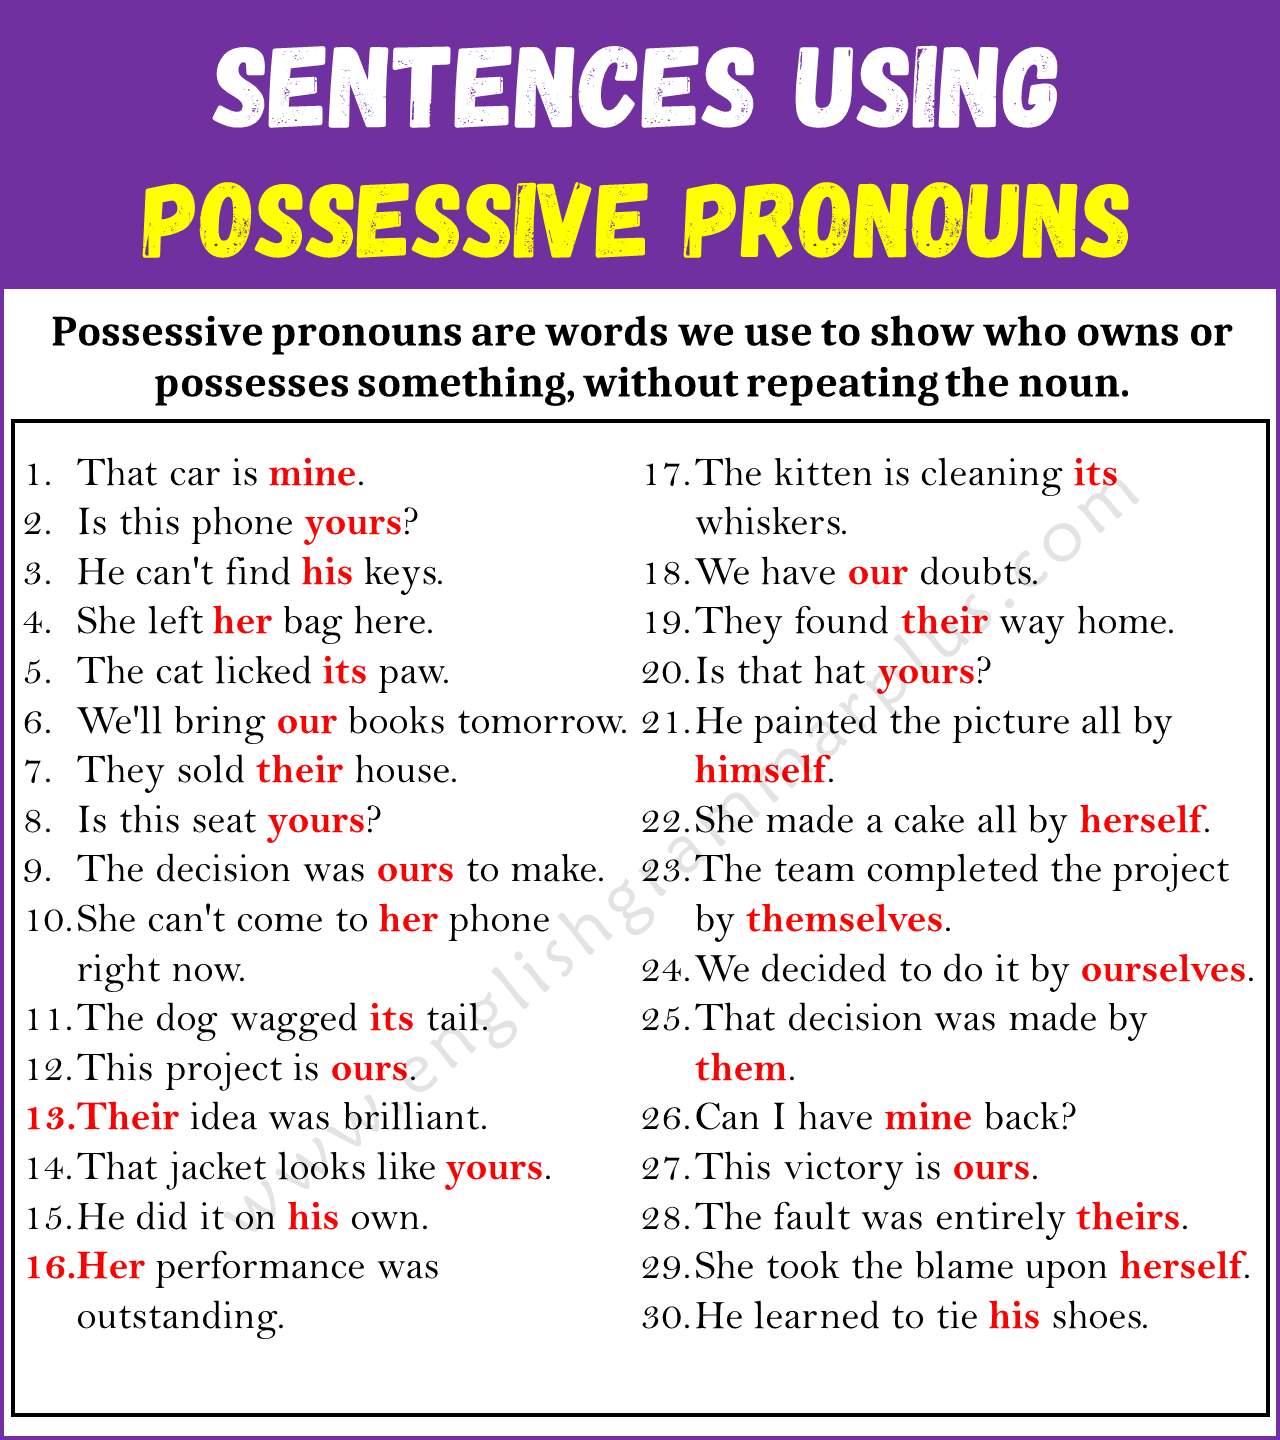 Sentences Using Possessive Pronouns